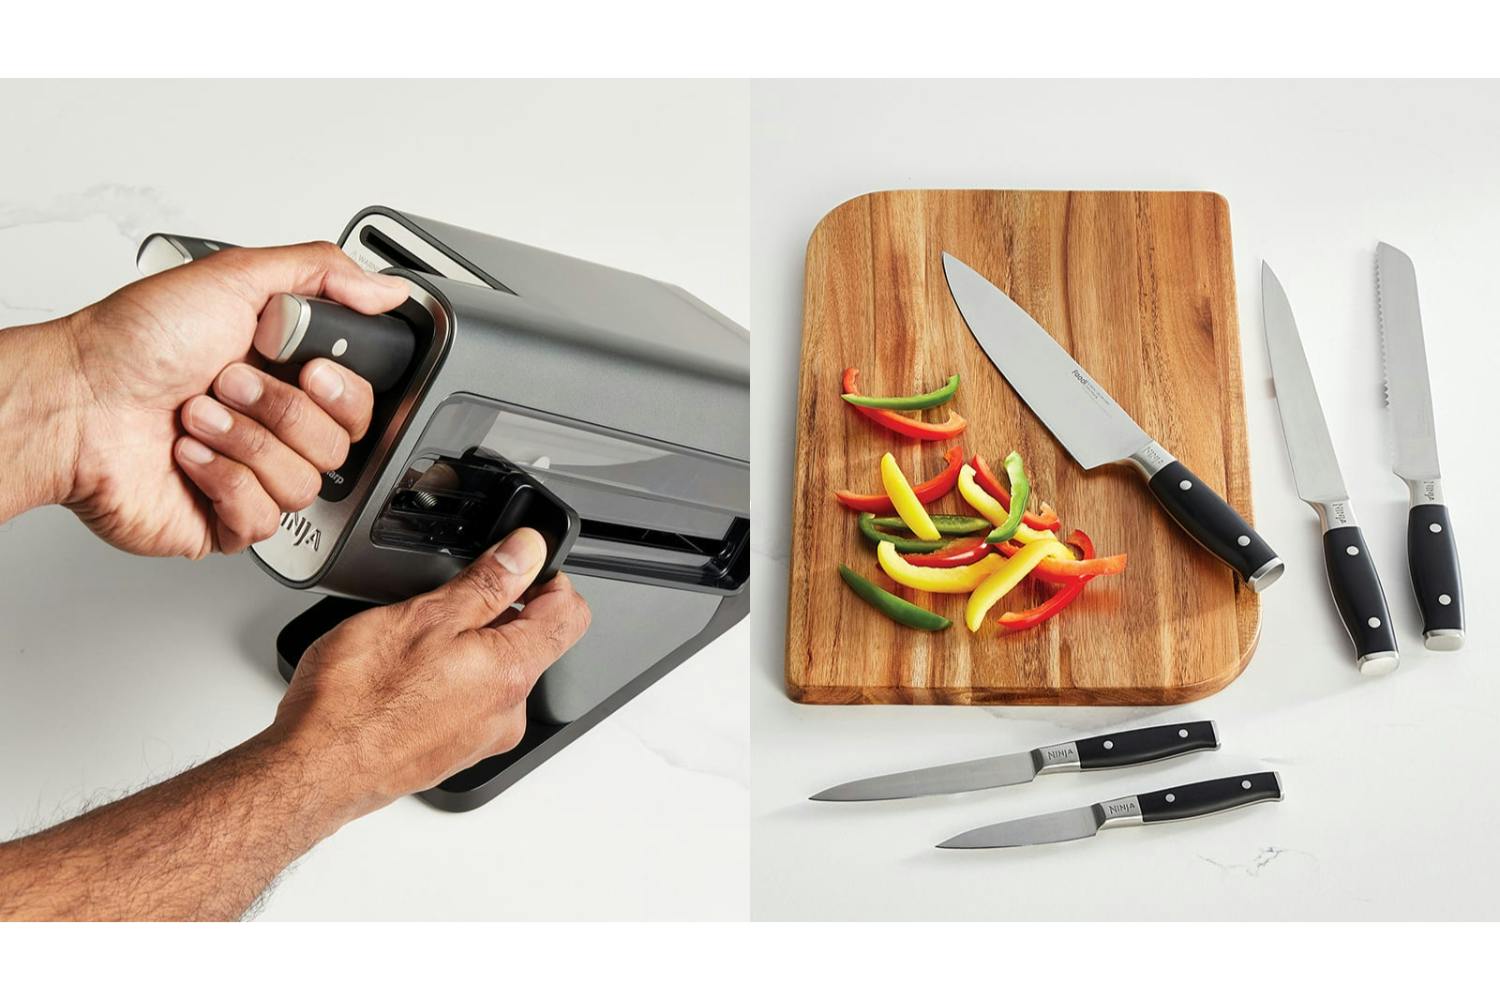 Ninja Foodi StaySharp Knife Block 6 Piece Set With Sharpener